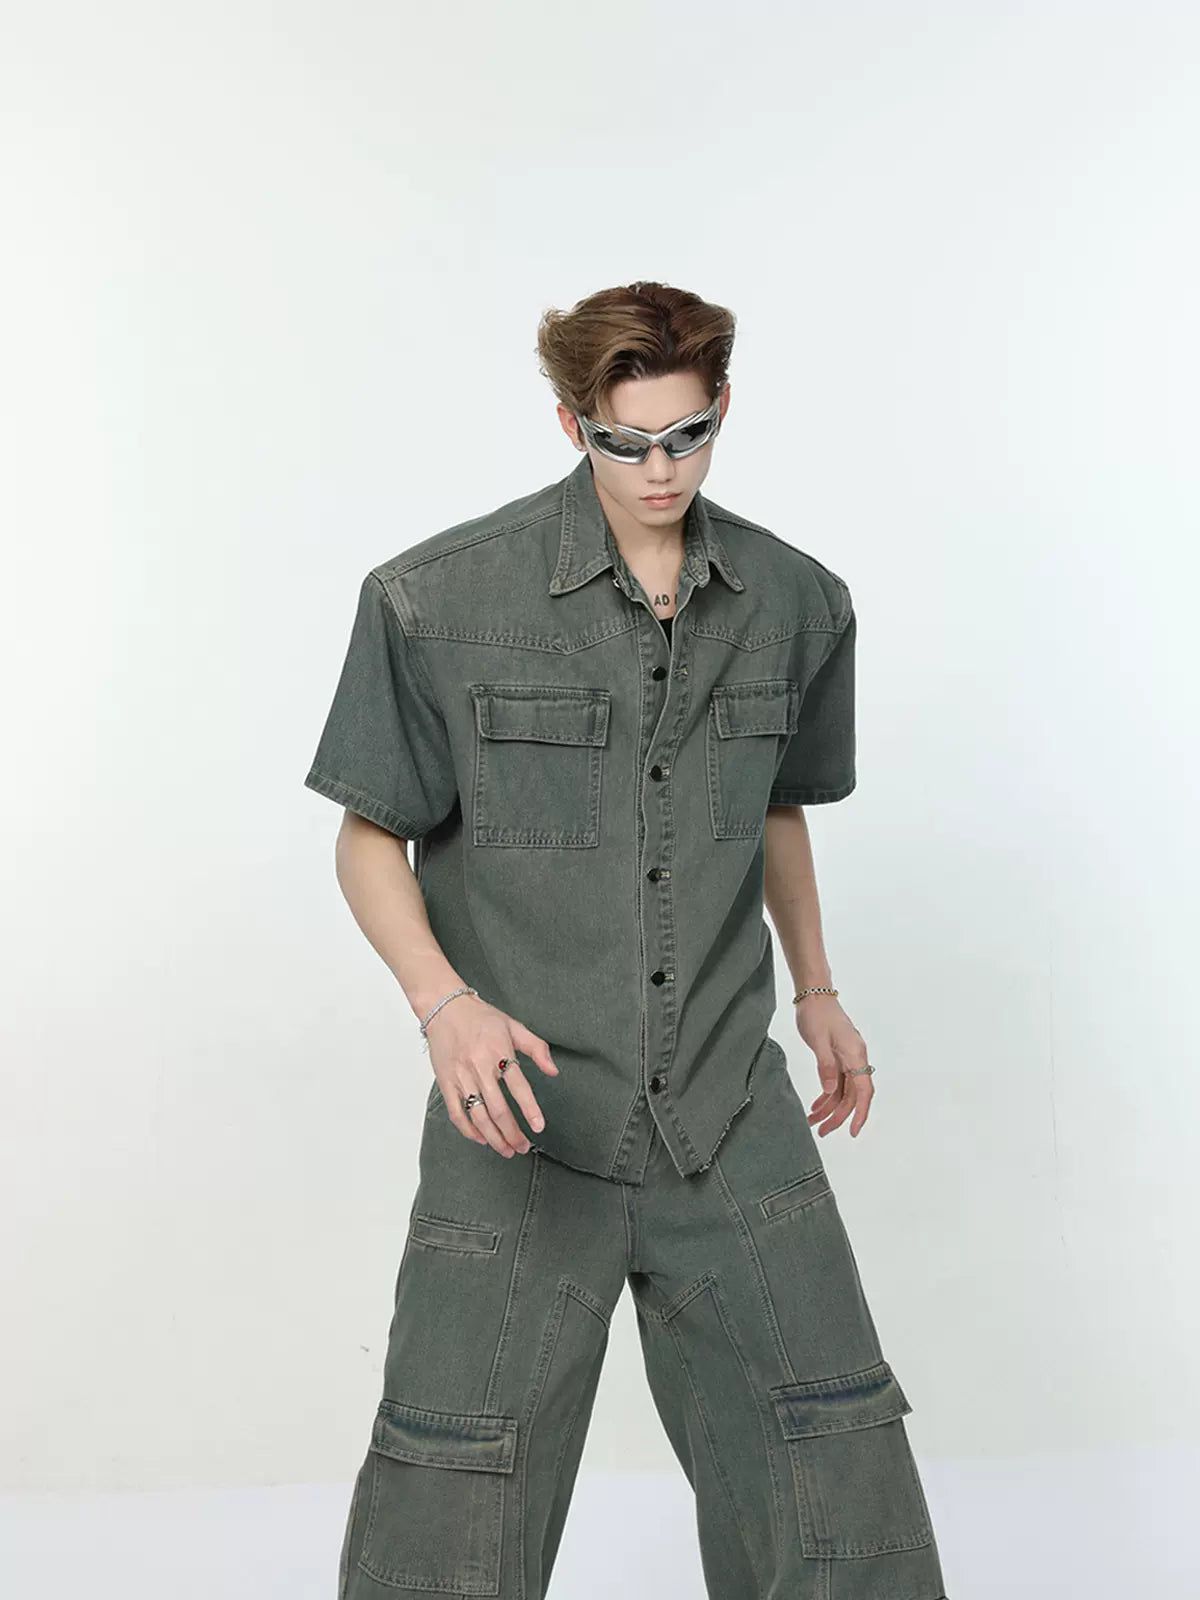 Raw Ends Denim Shirt & Jeans Set Korean Street Fashion Clothing Set By Turn Tide Shop Online at OH Vault